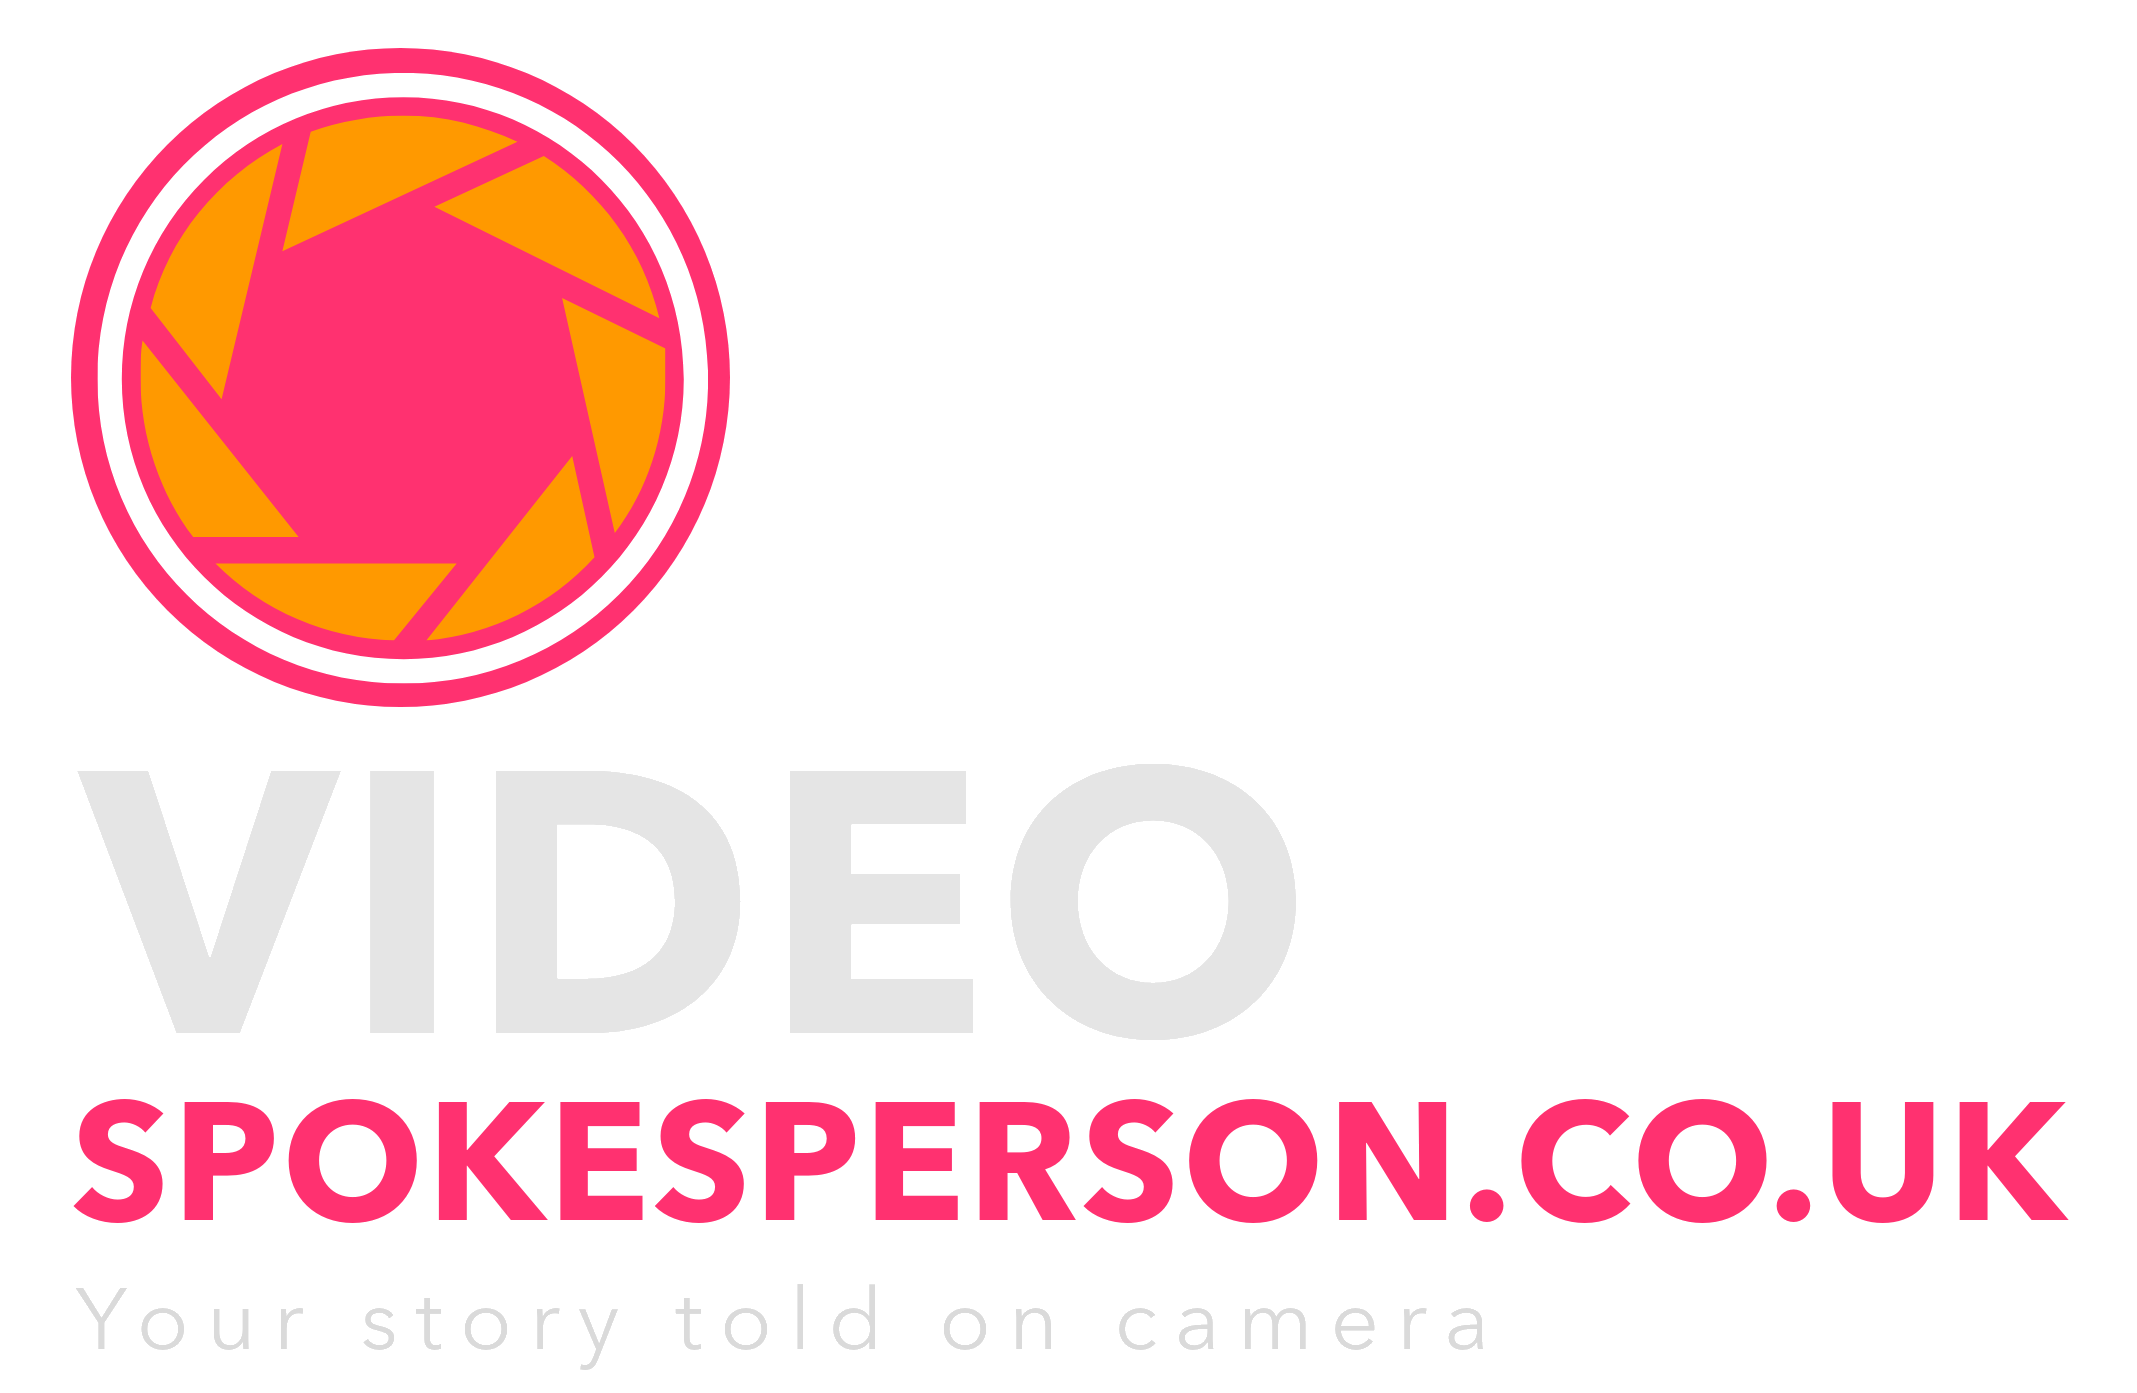 Videospokesperson.co.uk